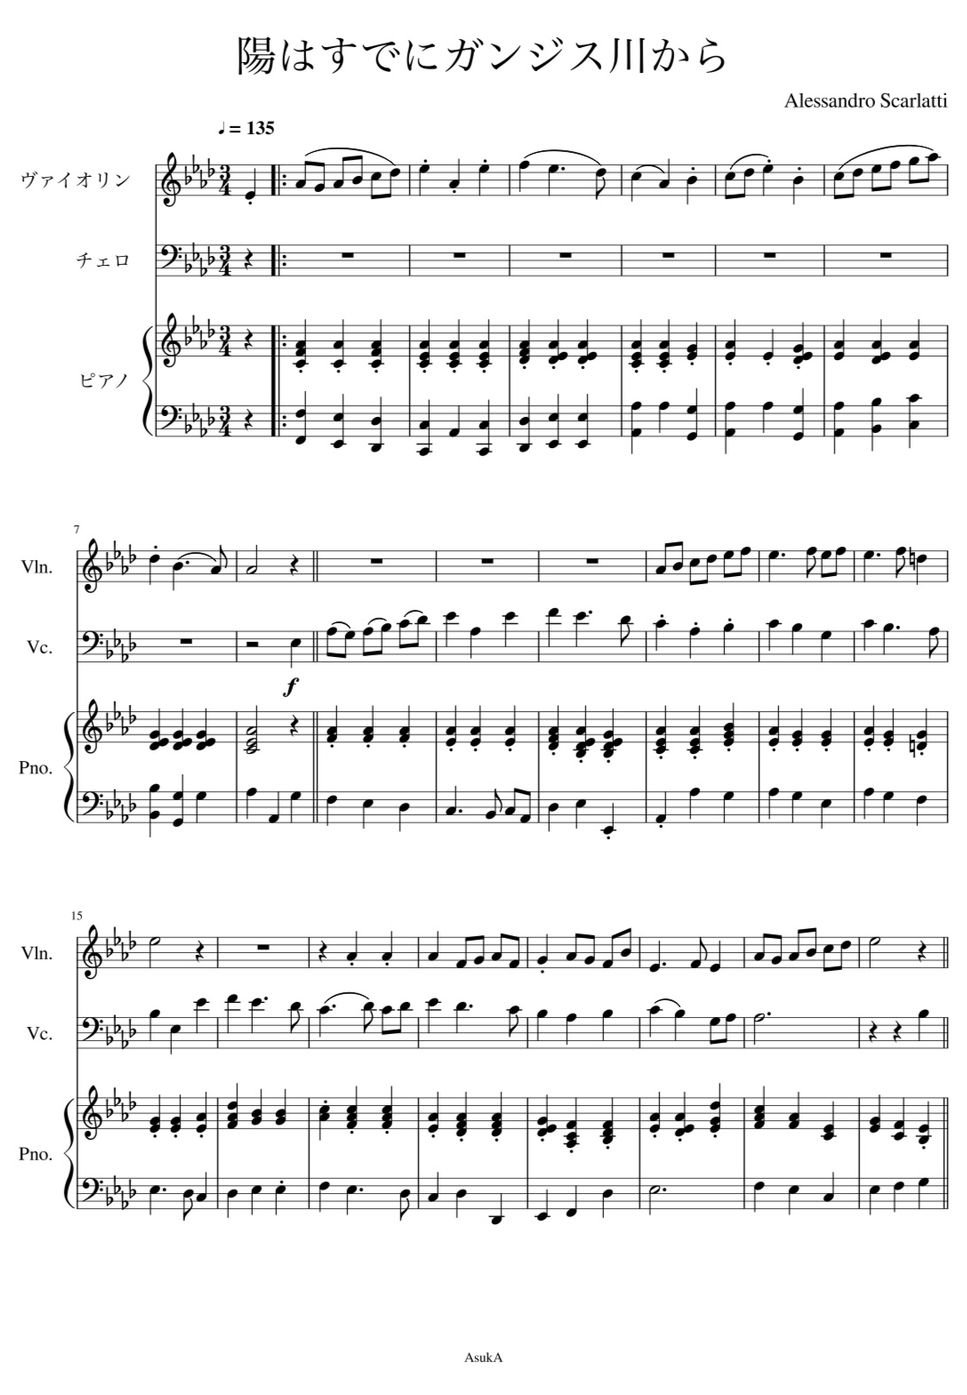 Alessandro Scarlatti - Gia il sole dal Gange (イタリア歌曲、ピアノトリオ、コンサート用) by AsukA